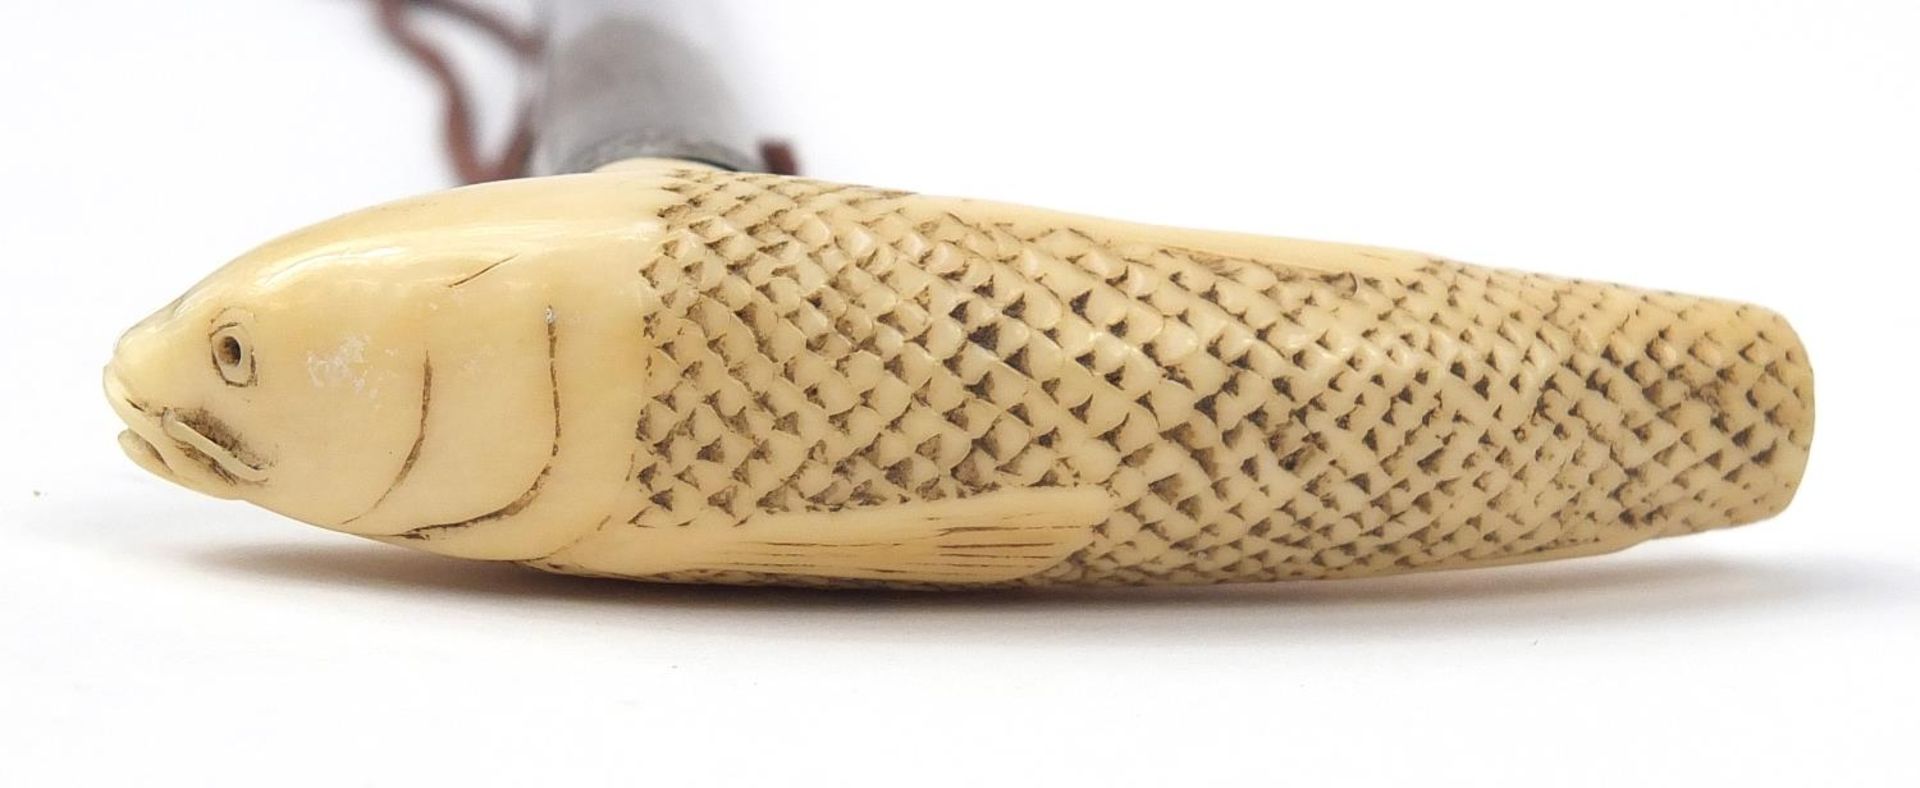 Hardwood walking stick with carved ivory Koi carp handle, 88cm in length - Image 7 of 7